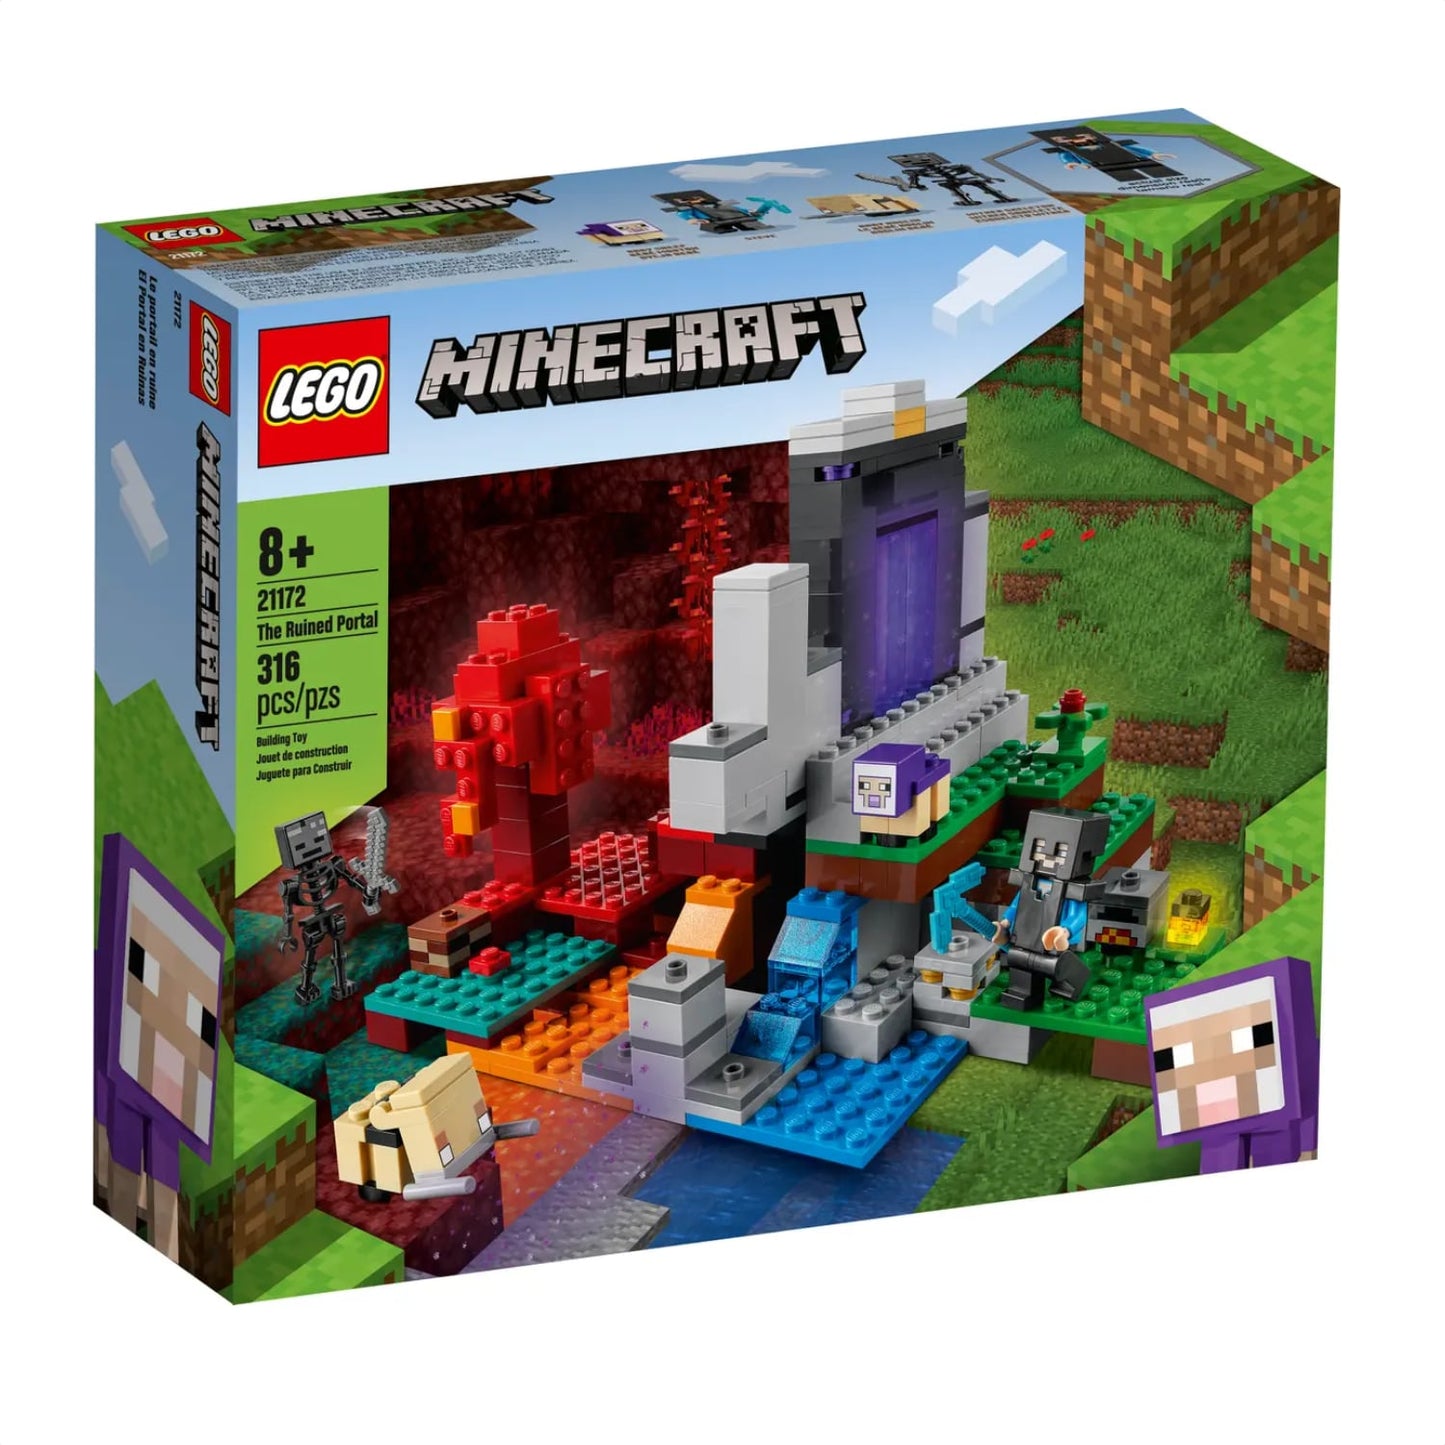 Lego 21172 Minecraft The Ruined Portal